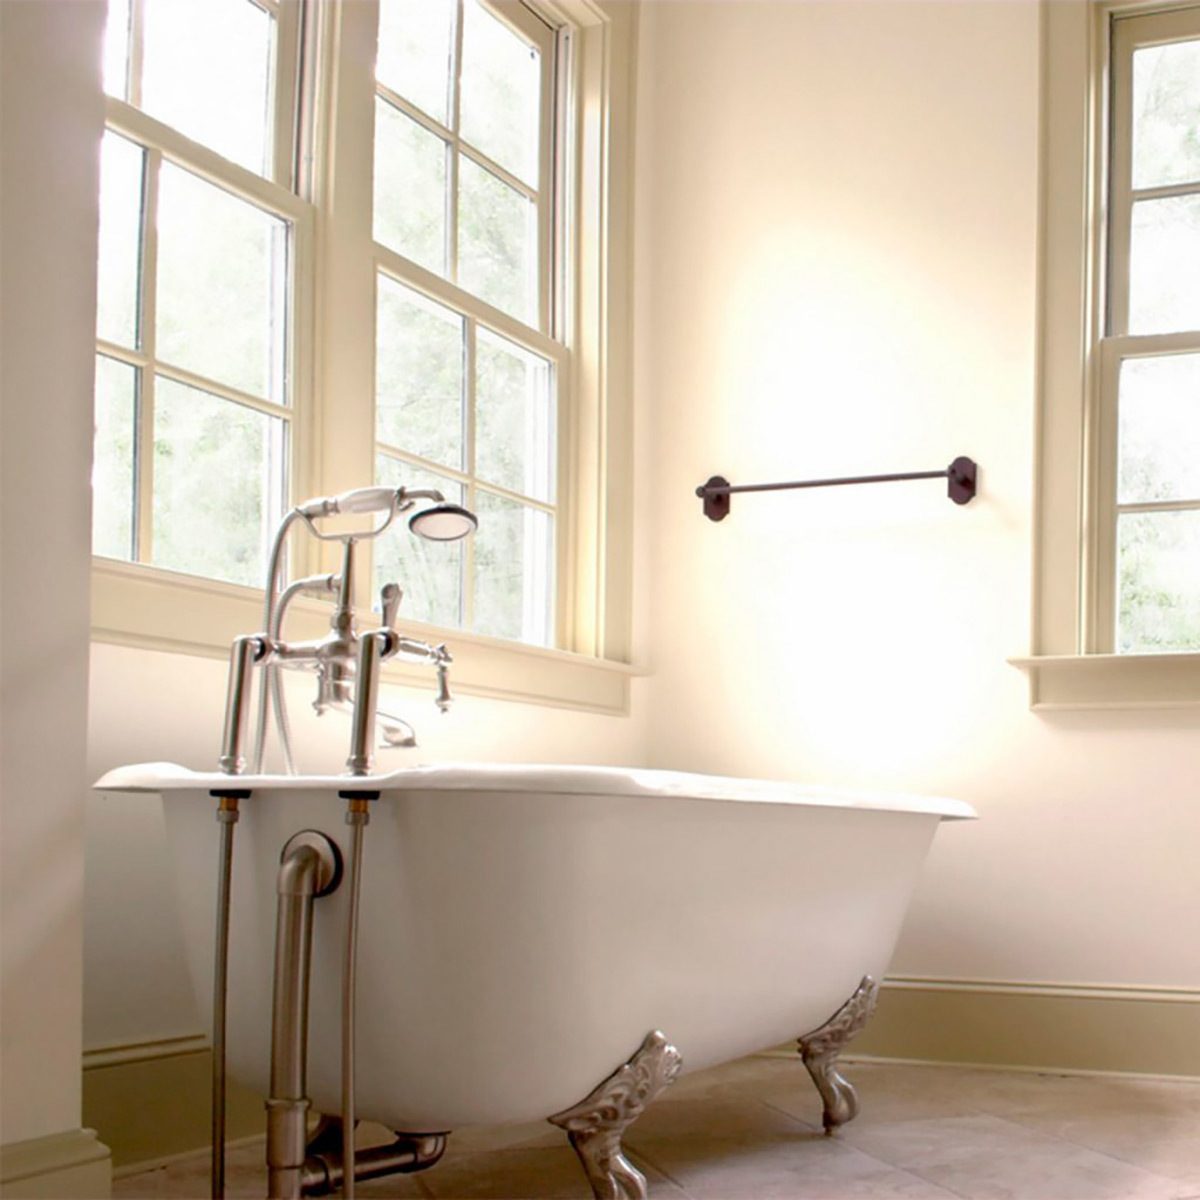 dfh17jun004-12-shutterstock_8570188 bathroom with clawfoot tub bathtubs